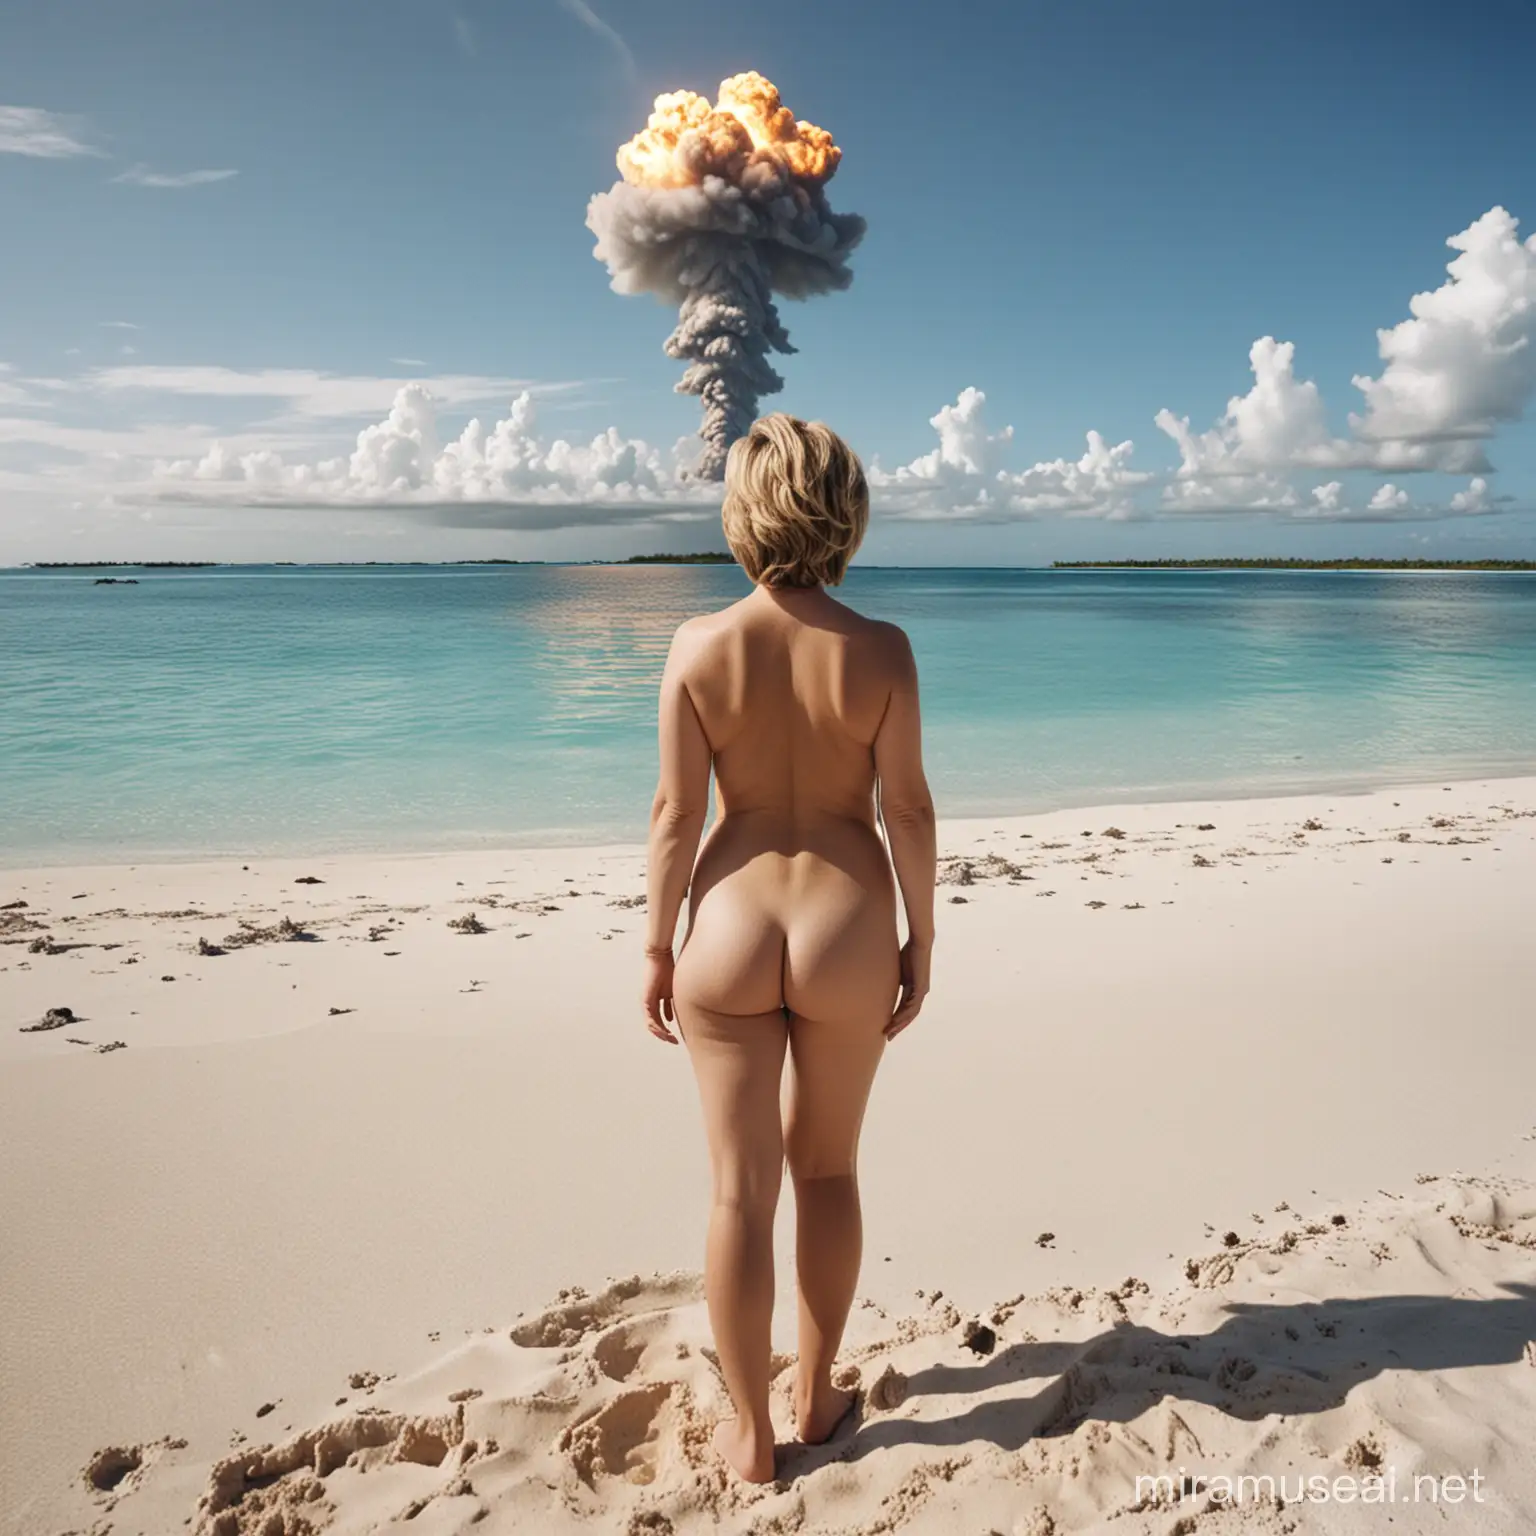 Hillary Clinton Sunbathing Nude on Bikini Atoll Amid Nuclear Explosion